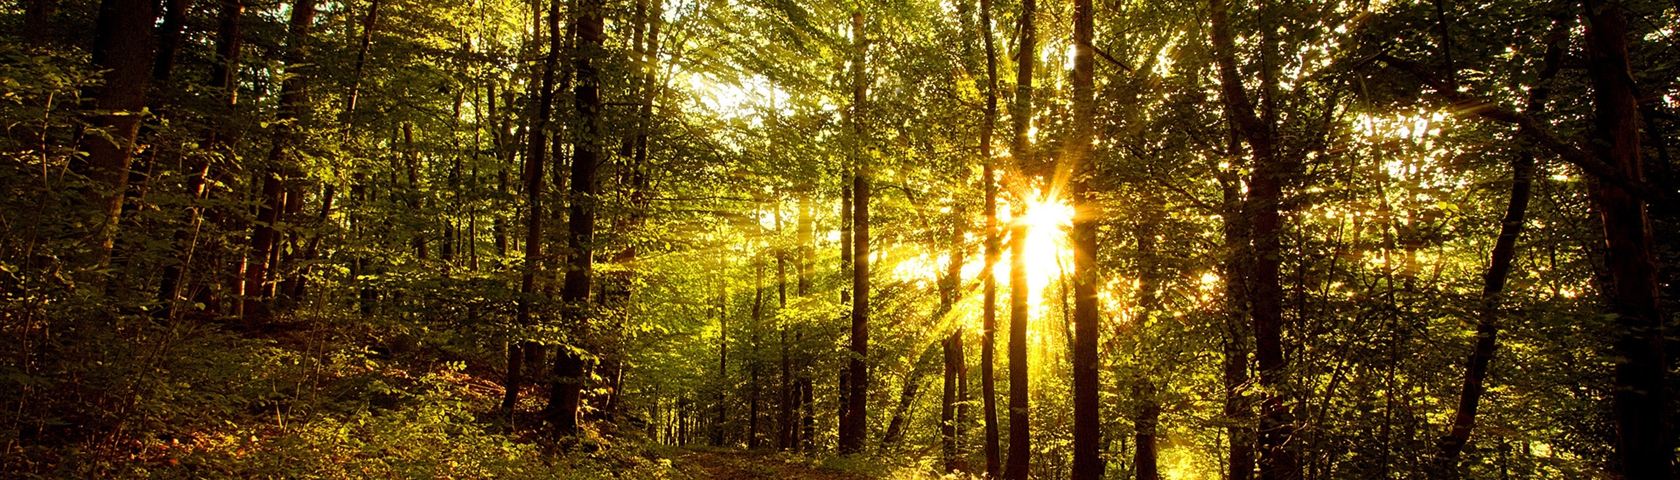 Sun Through the Forest